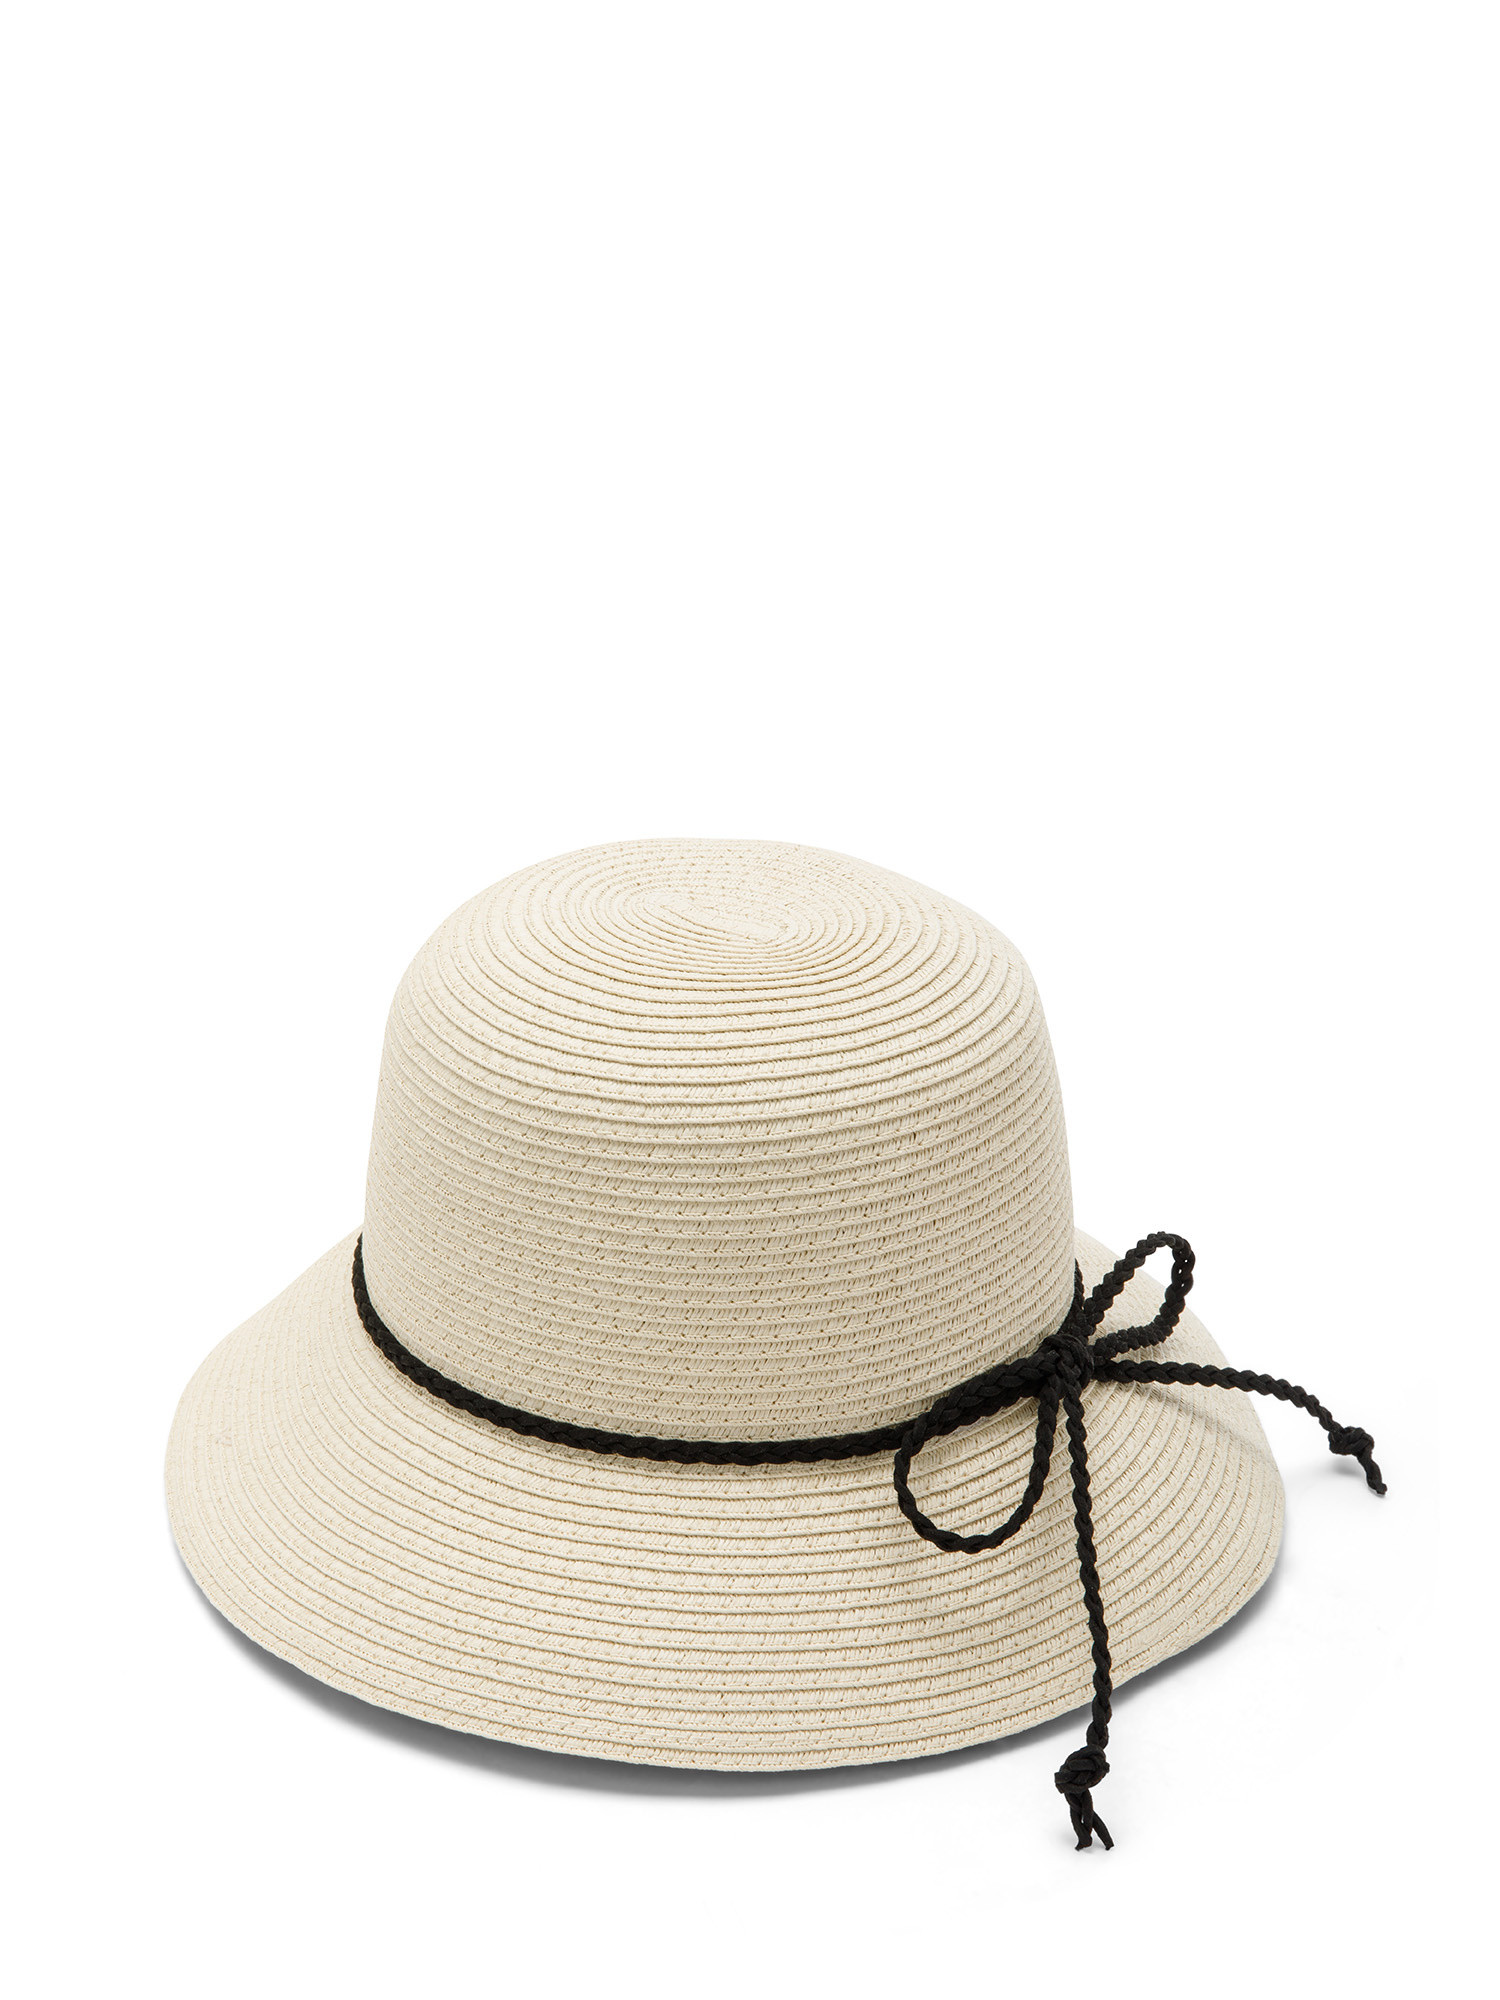 Koan - Braided hat, Light Beige, large image number 0